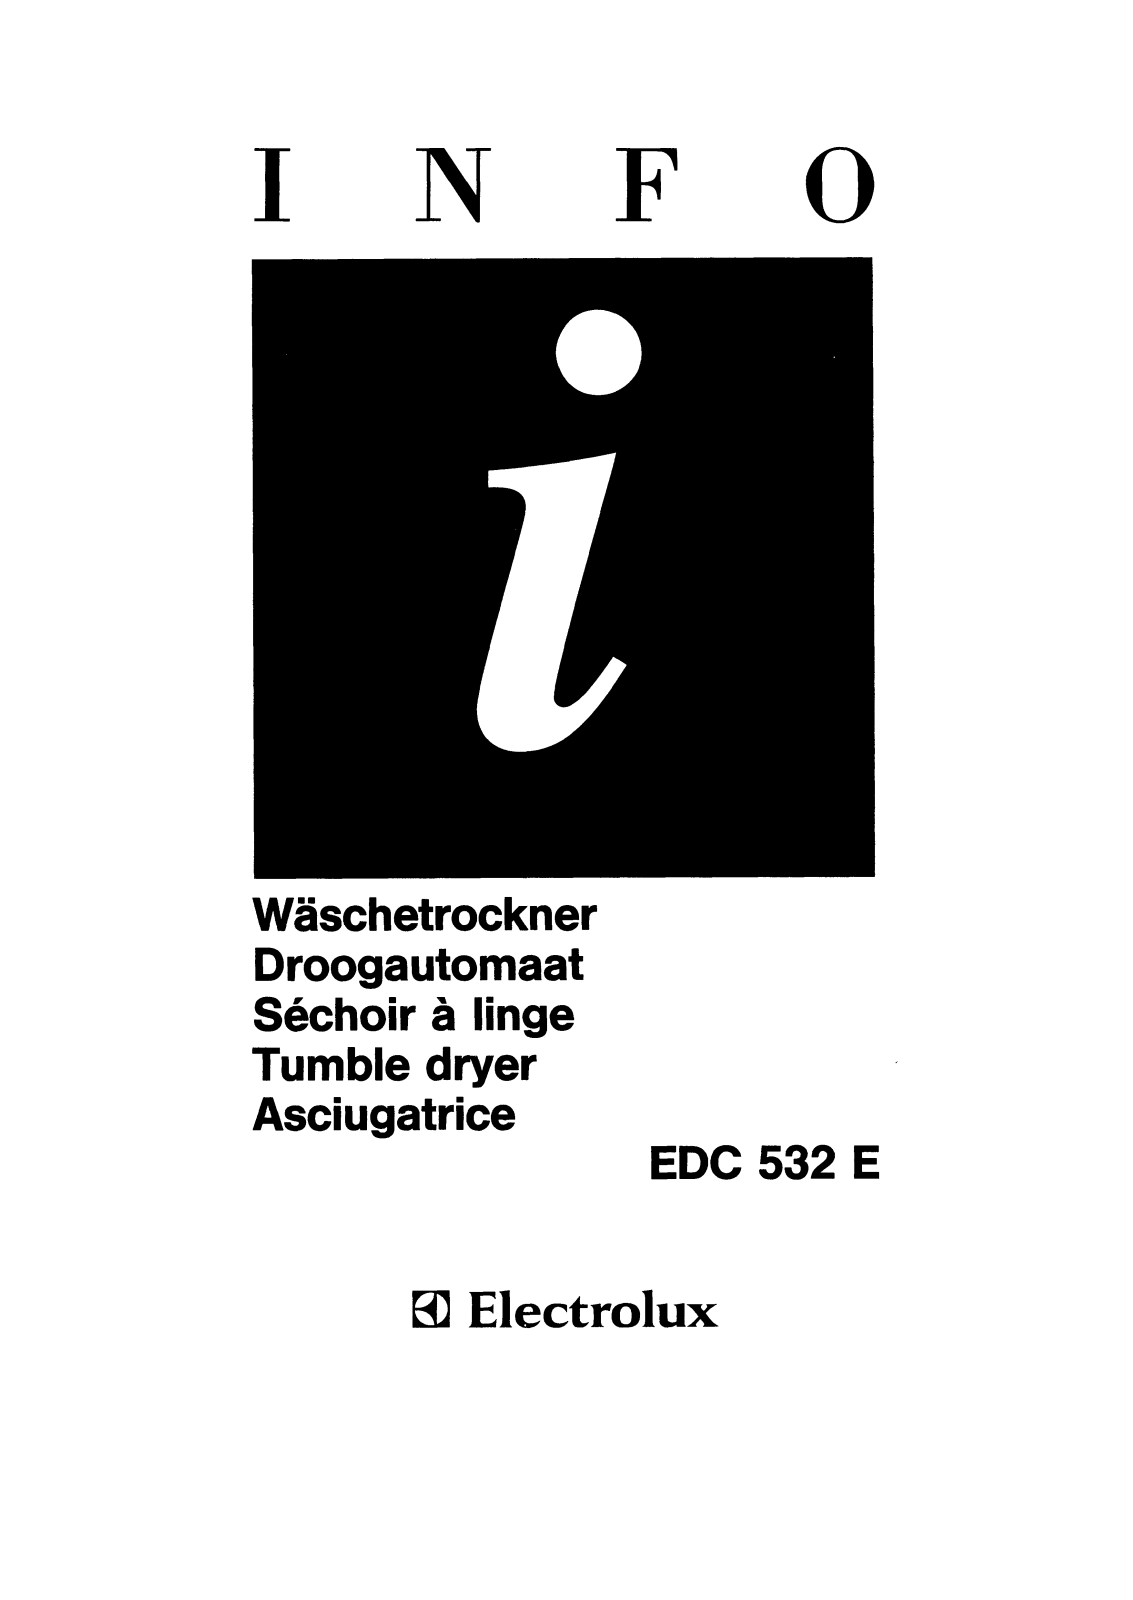 electrolux EDC532E User Manual